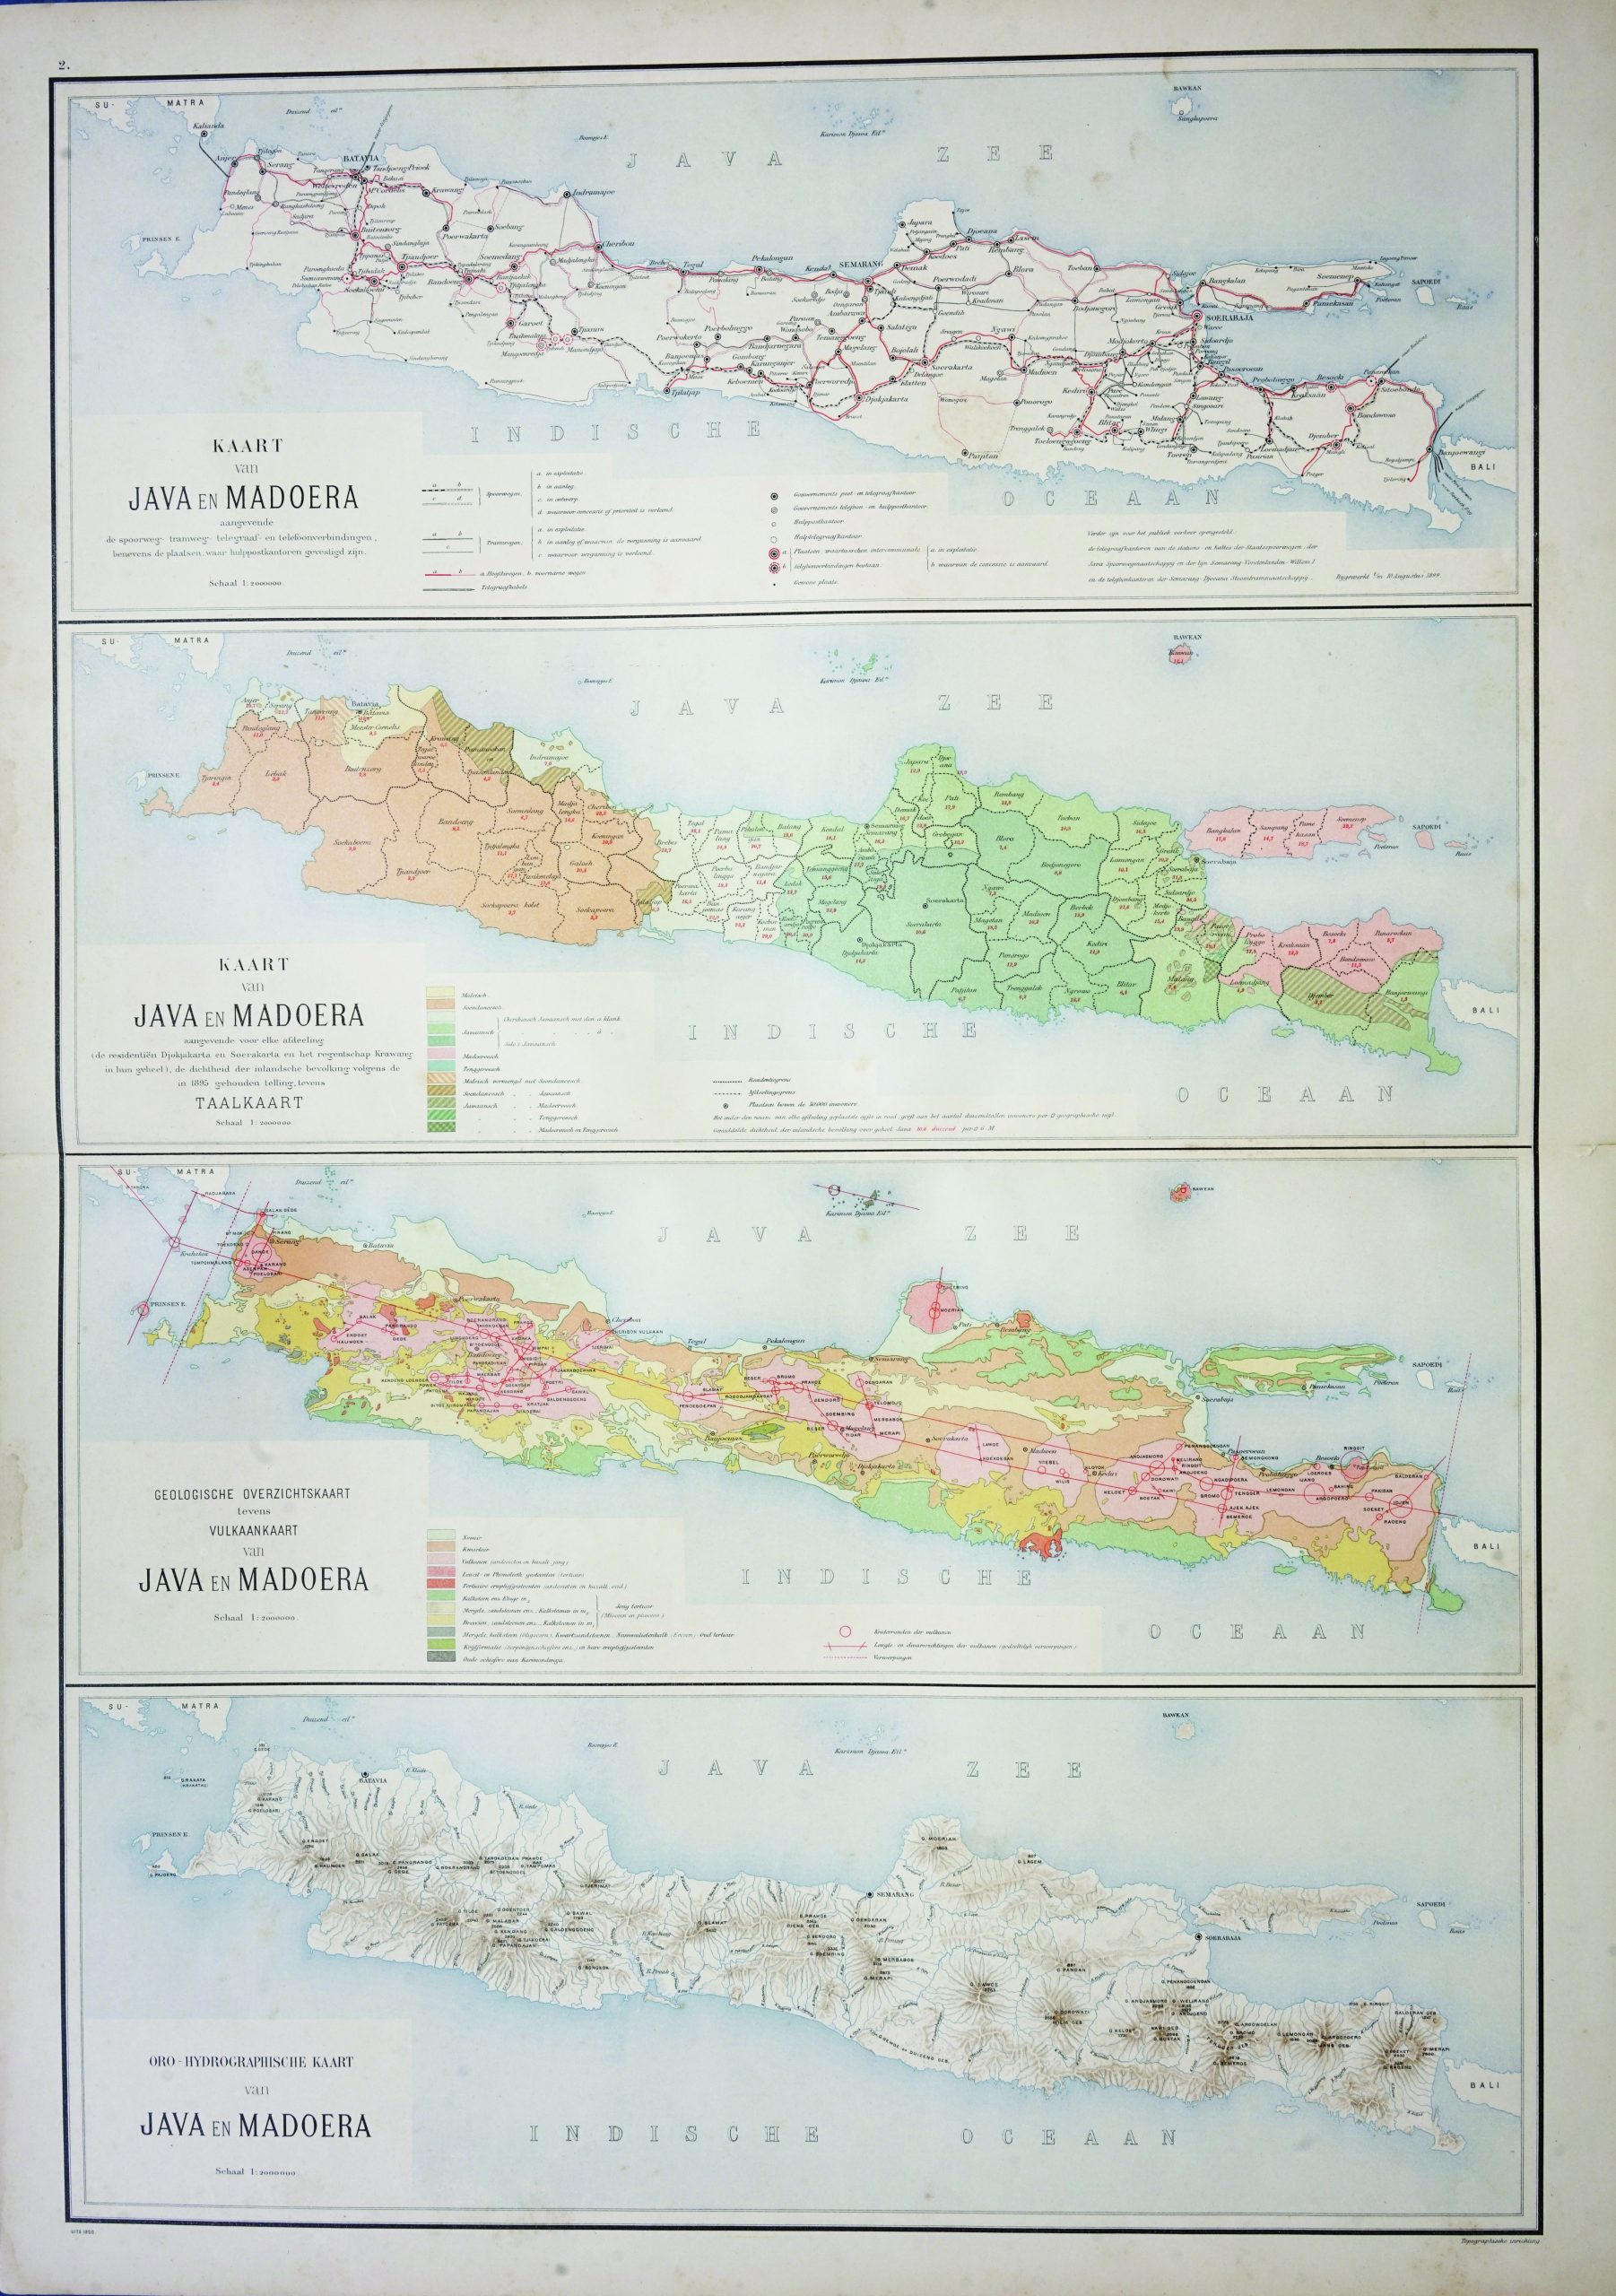 Map of Java and Madura - Stemfoort & Siethoff (c.1883-1885)